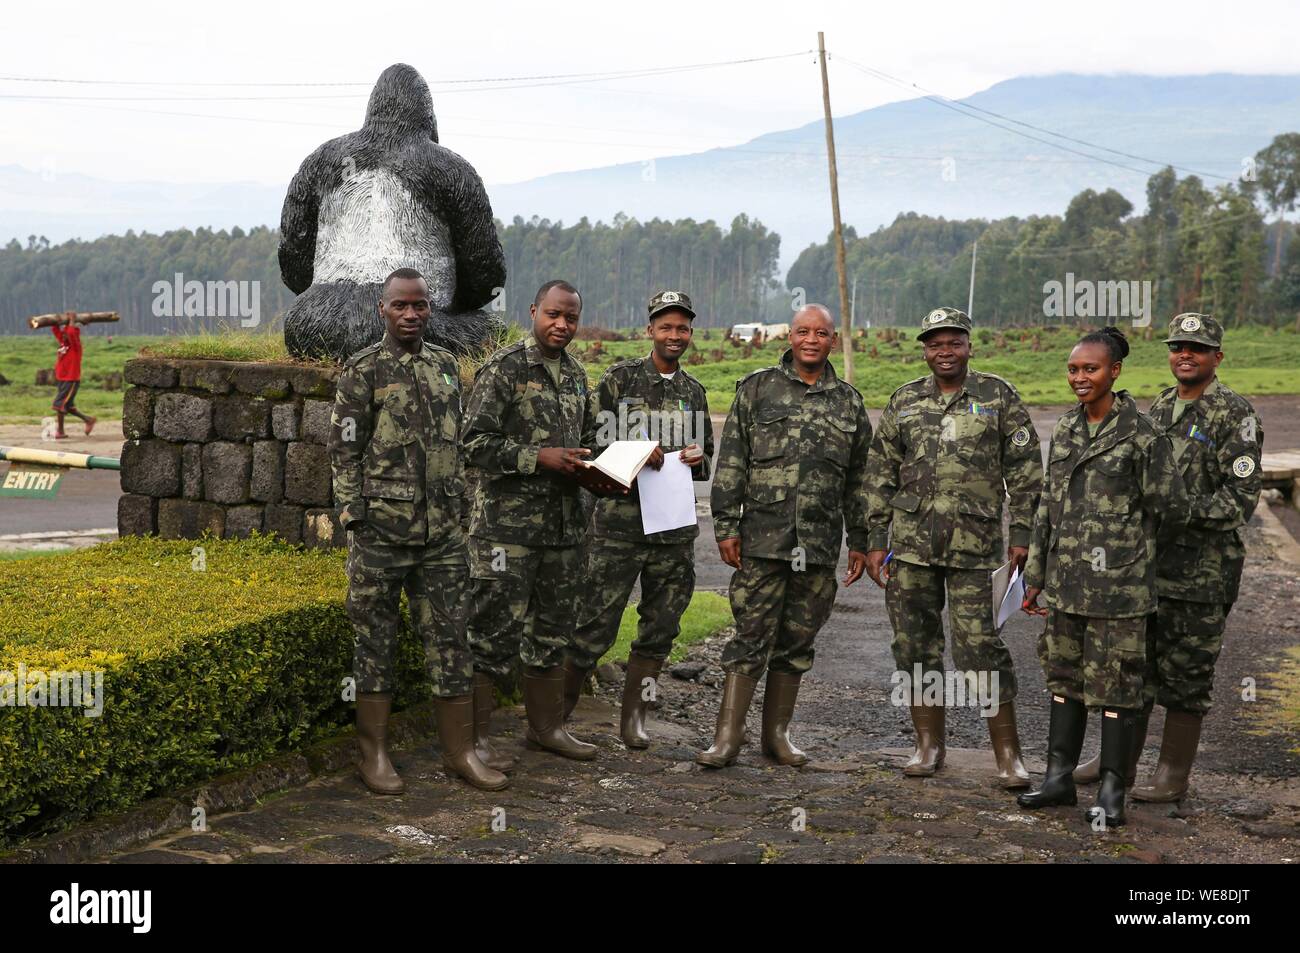 Ruanda, Parco Nazionale Vulcani, lattice rangers all'entrata del Parco Nazionale Vulcani in posa di fronte a una gigantesca statua di gorilla di montagna Foto Stock